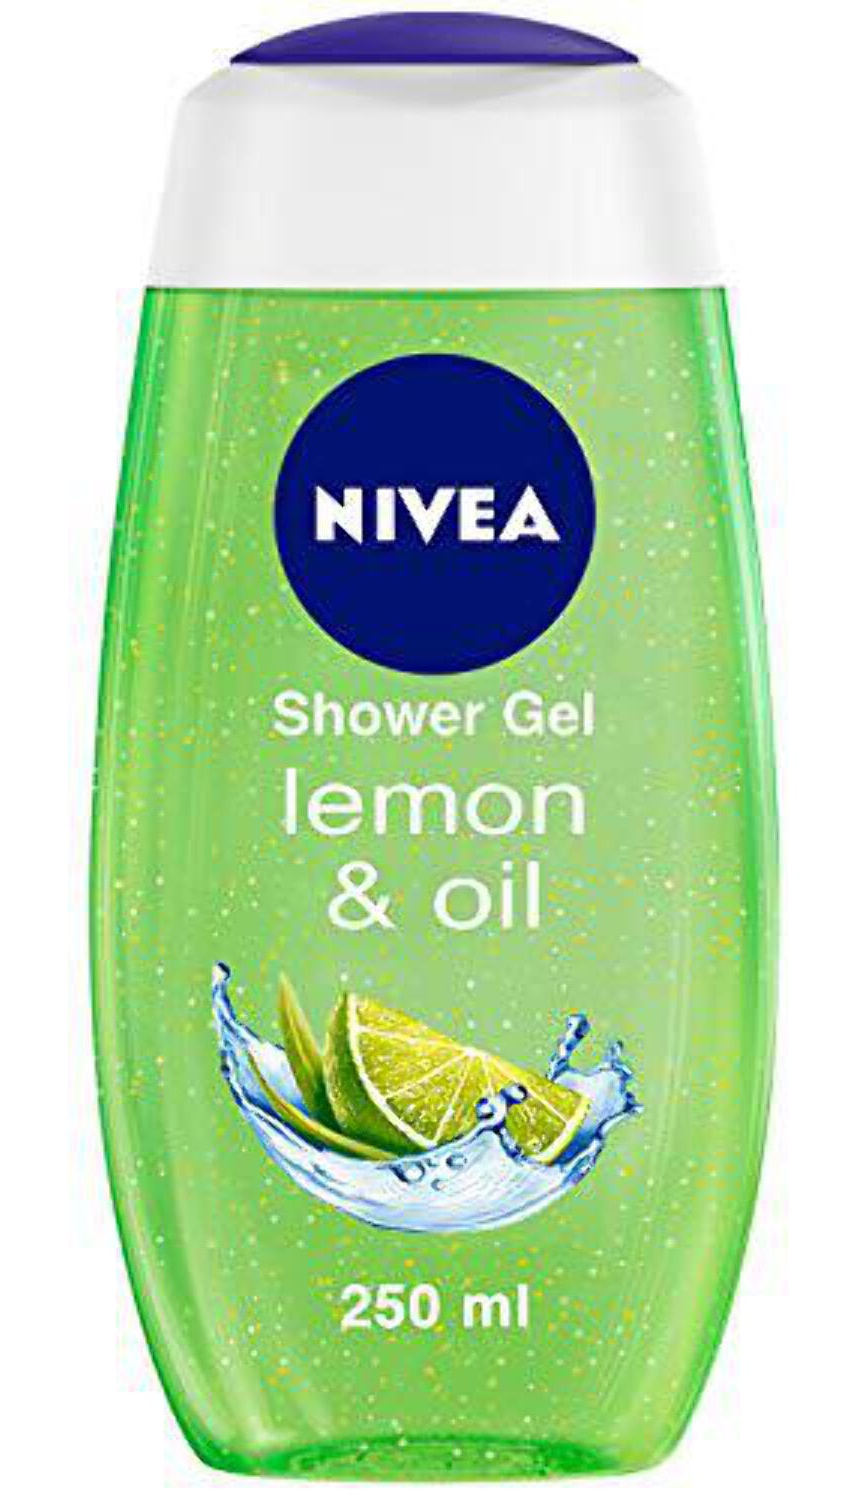 Nivea Body Wash, Lemon & Oil Shower Gel, Pampering Care With Refreshing Scent Of Lemon